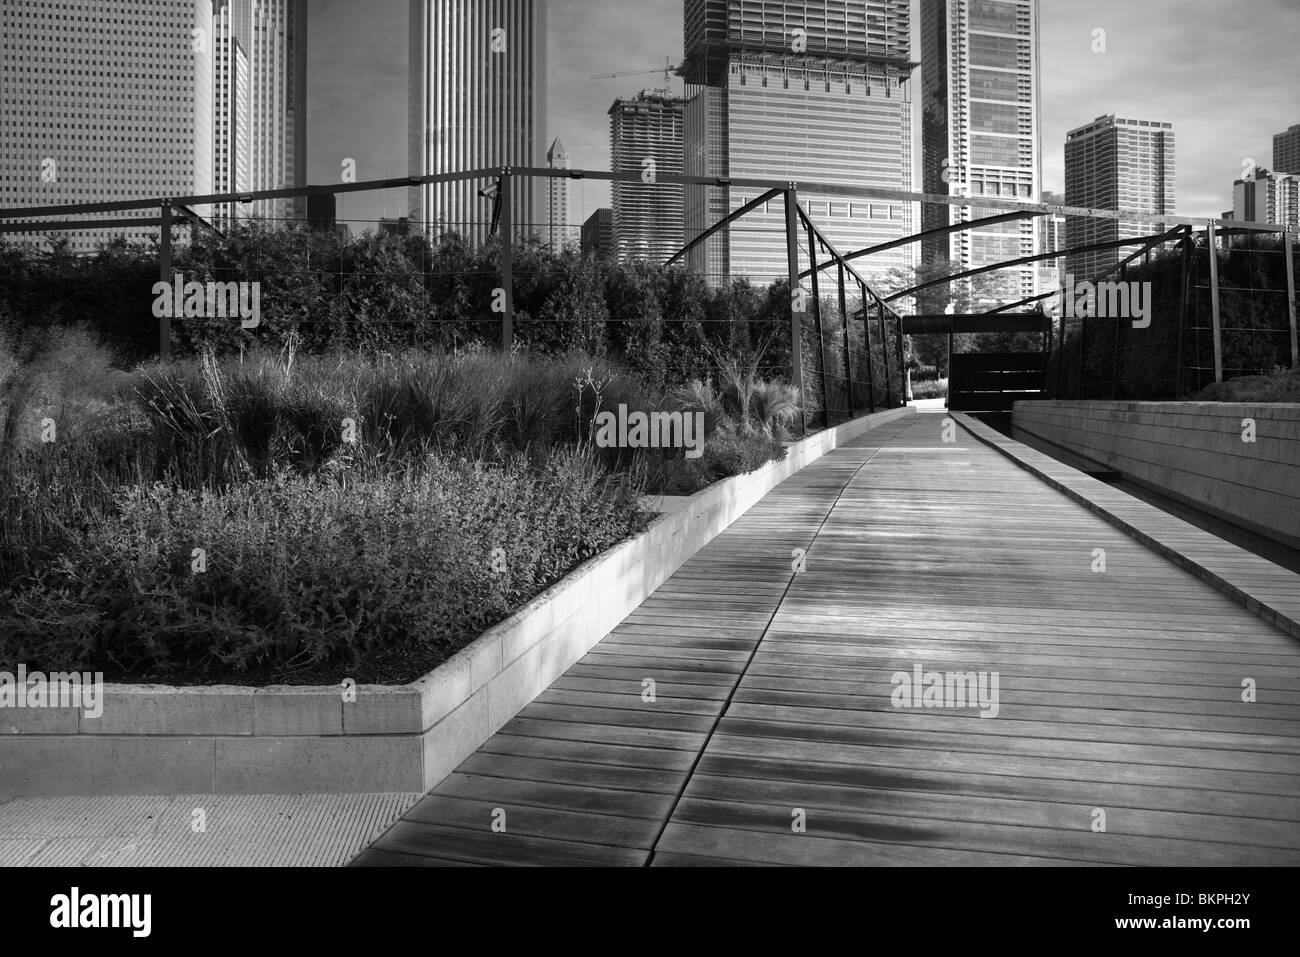 PRAIRIE STYLE LURIE GARDEN IN MILLENIUM PARK IN DOWNTOWN CHICAGO, ILLLINOIS, USA Stock Photo